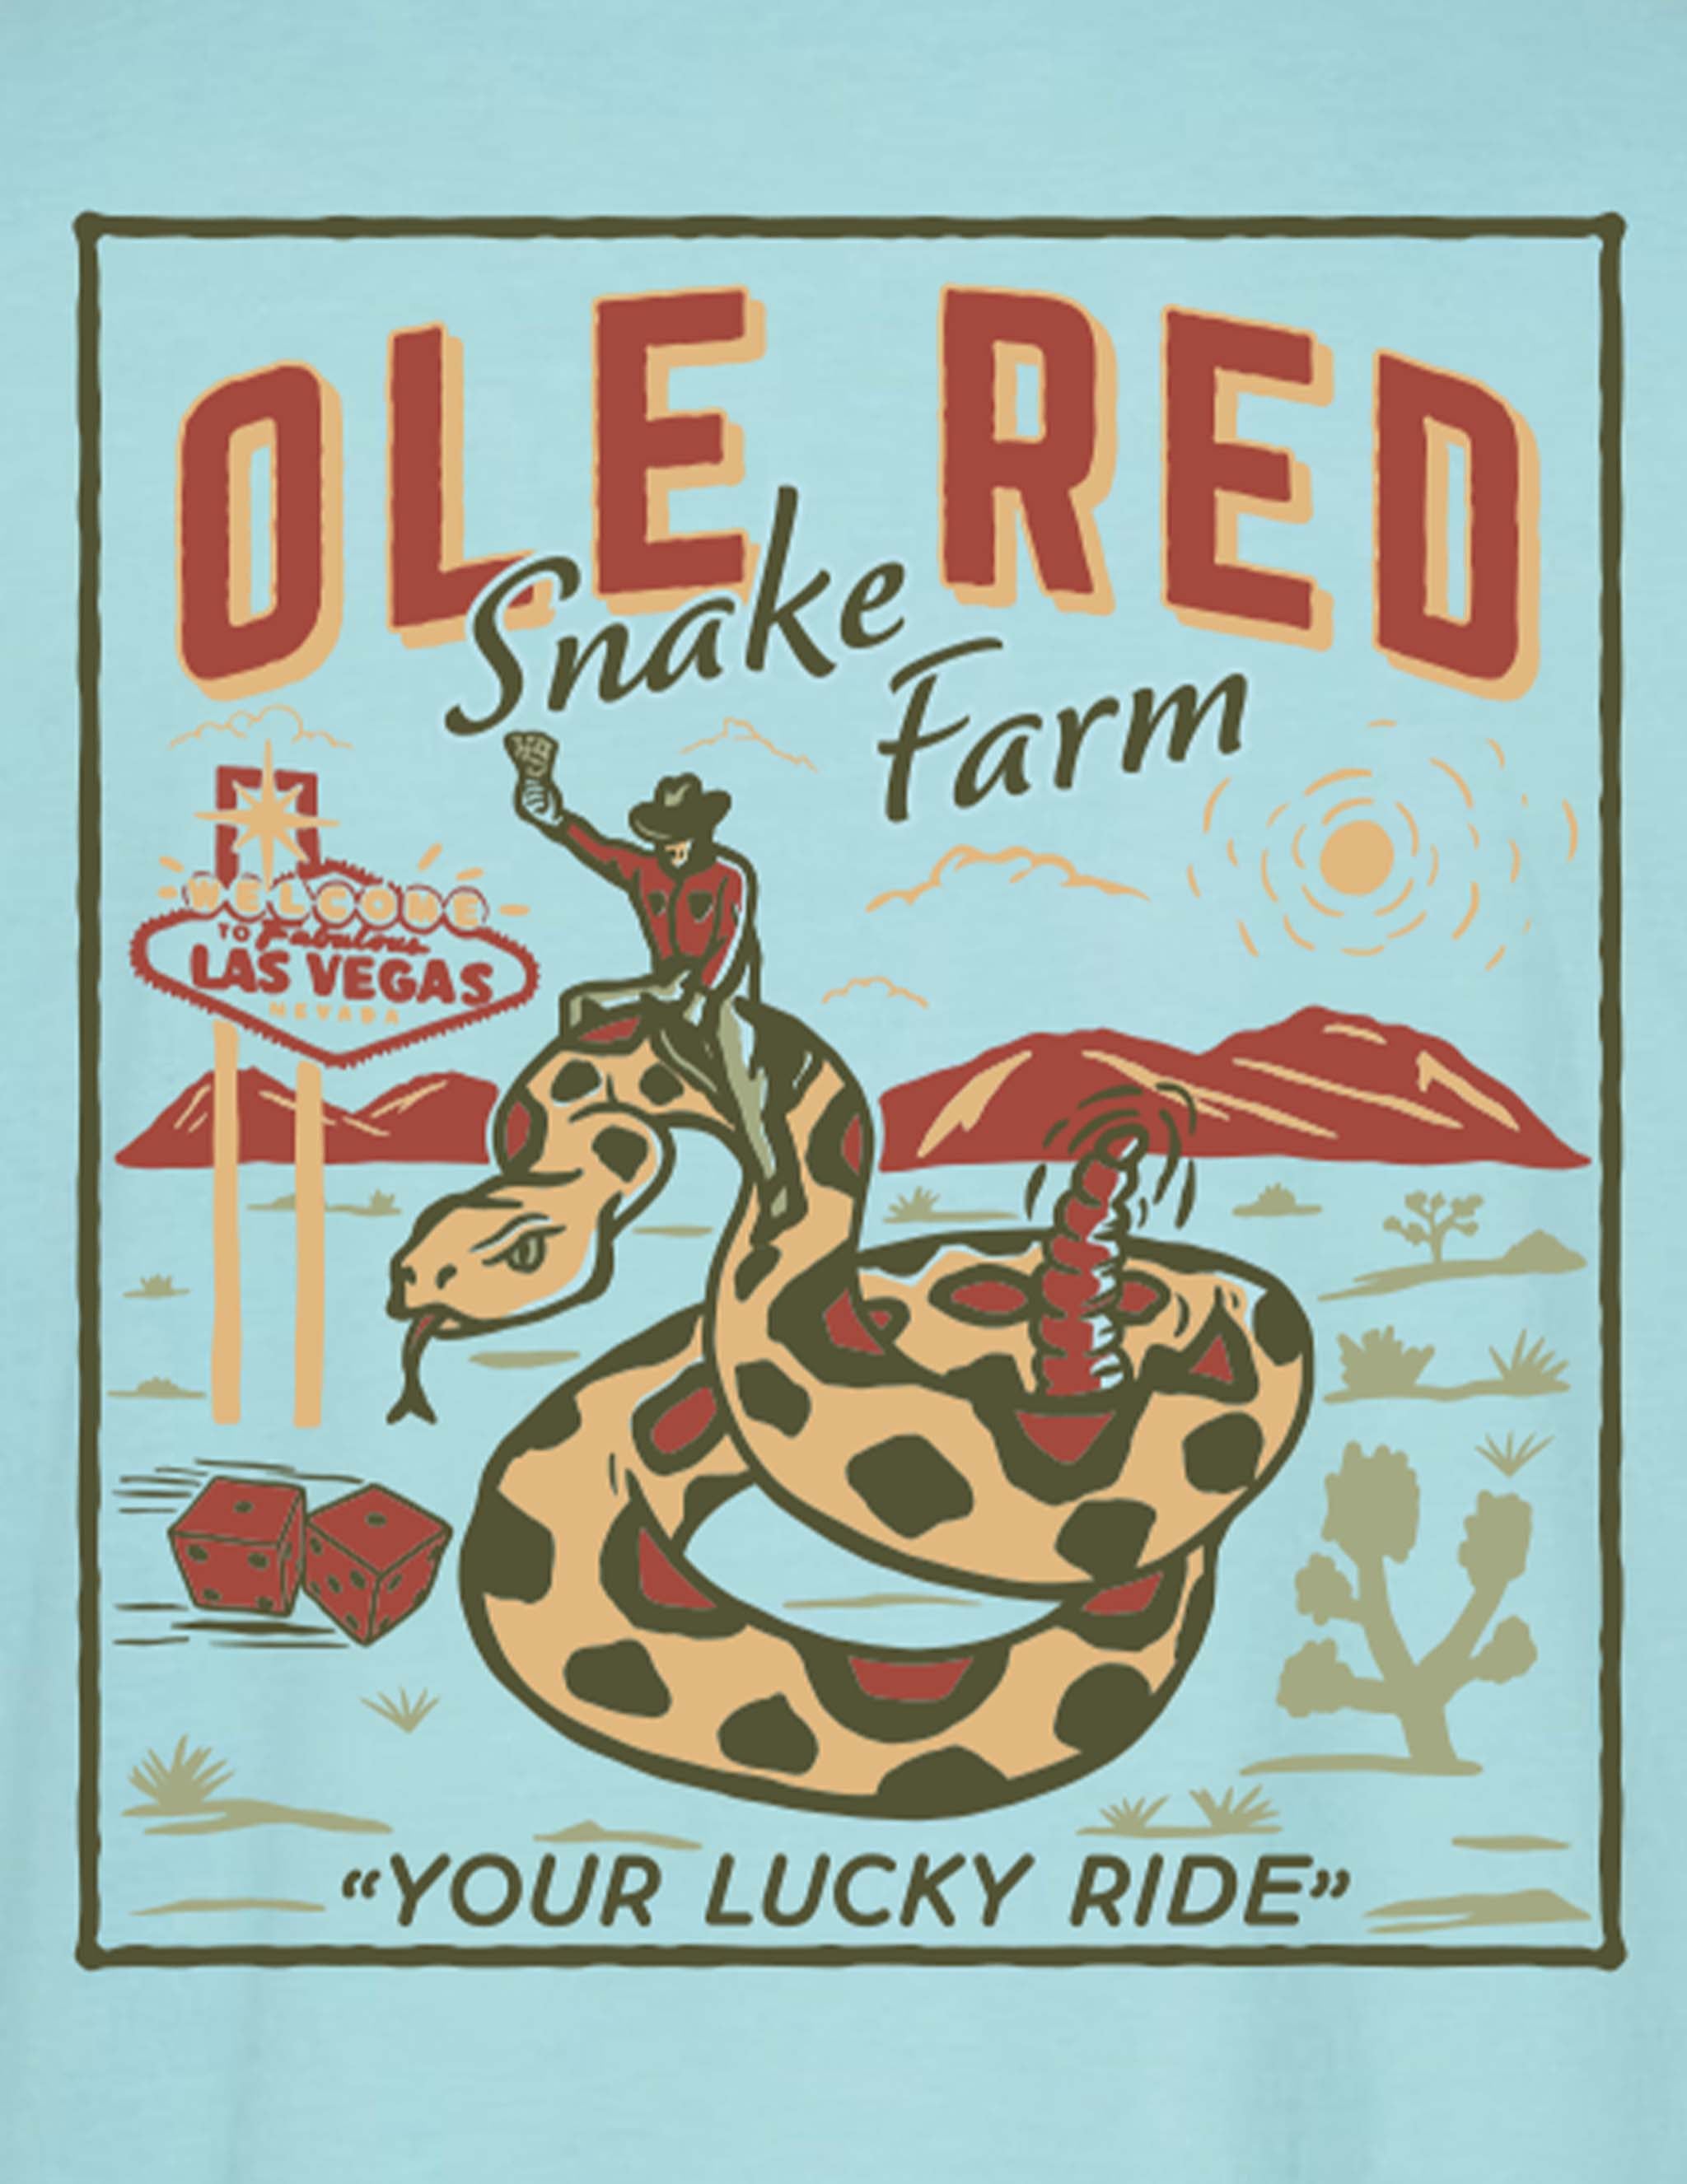 Ole Red Vegas Snake Farm T-Shirt